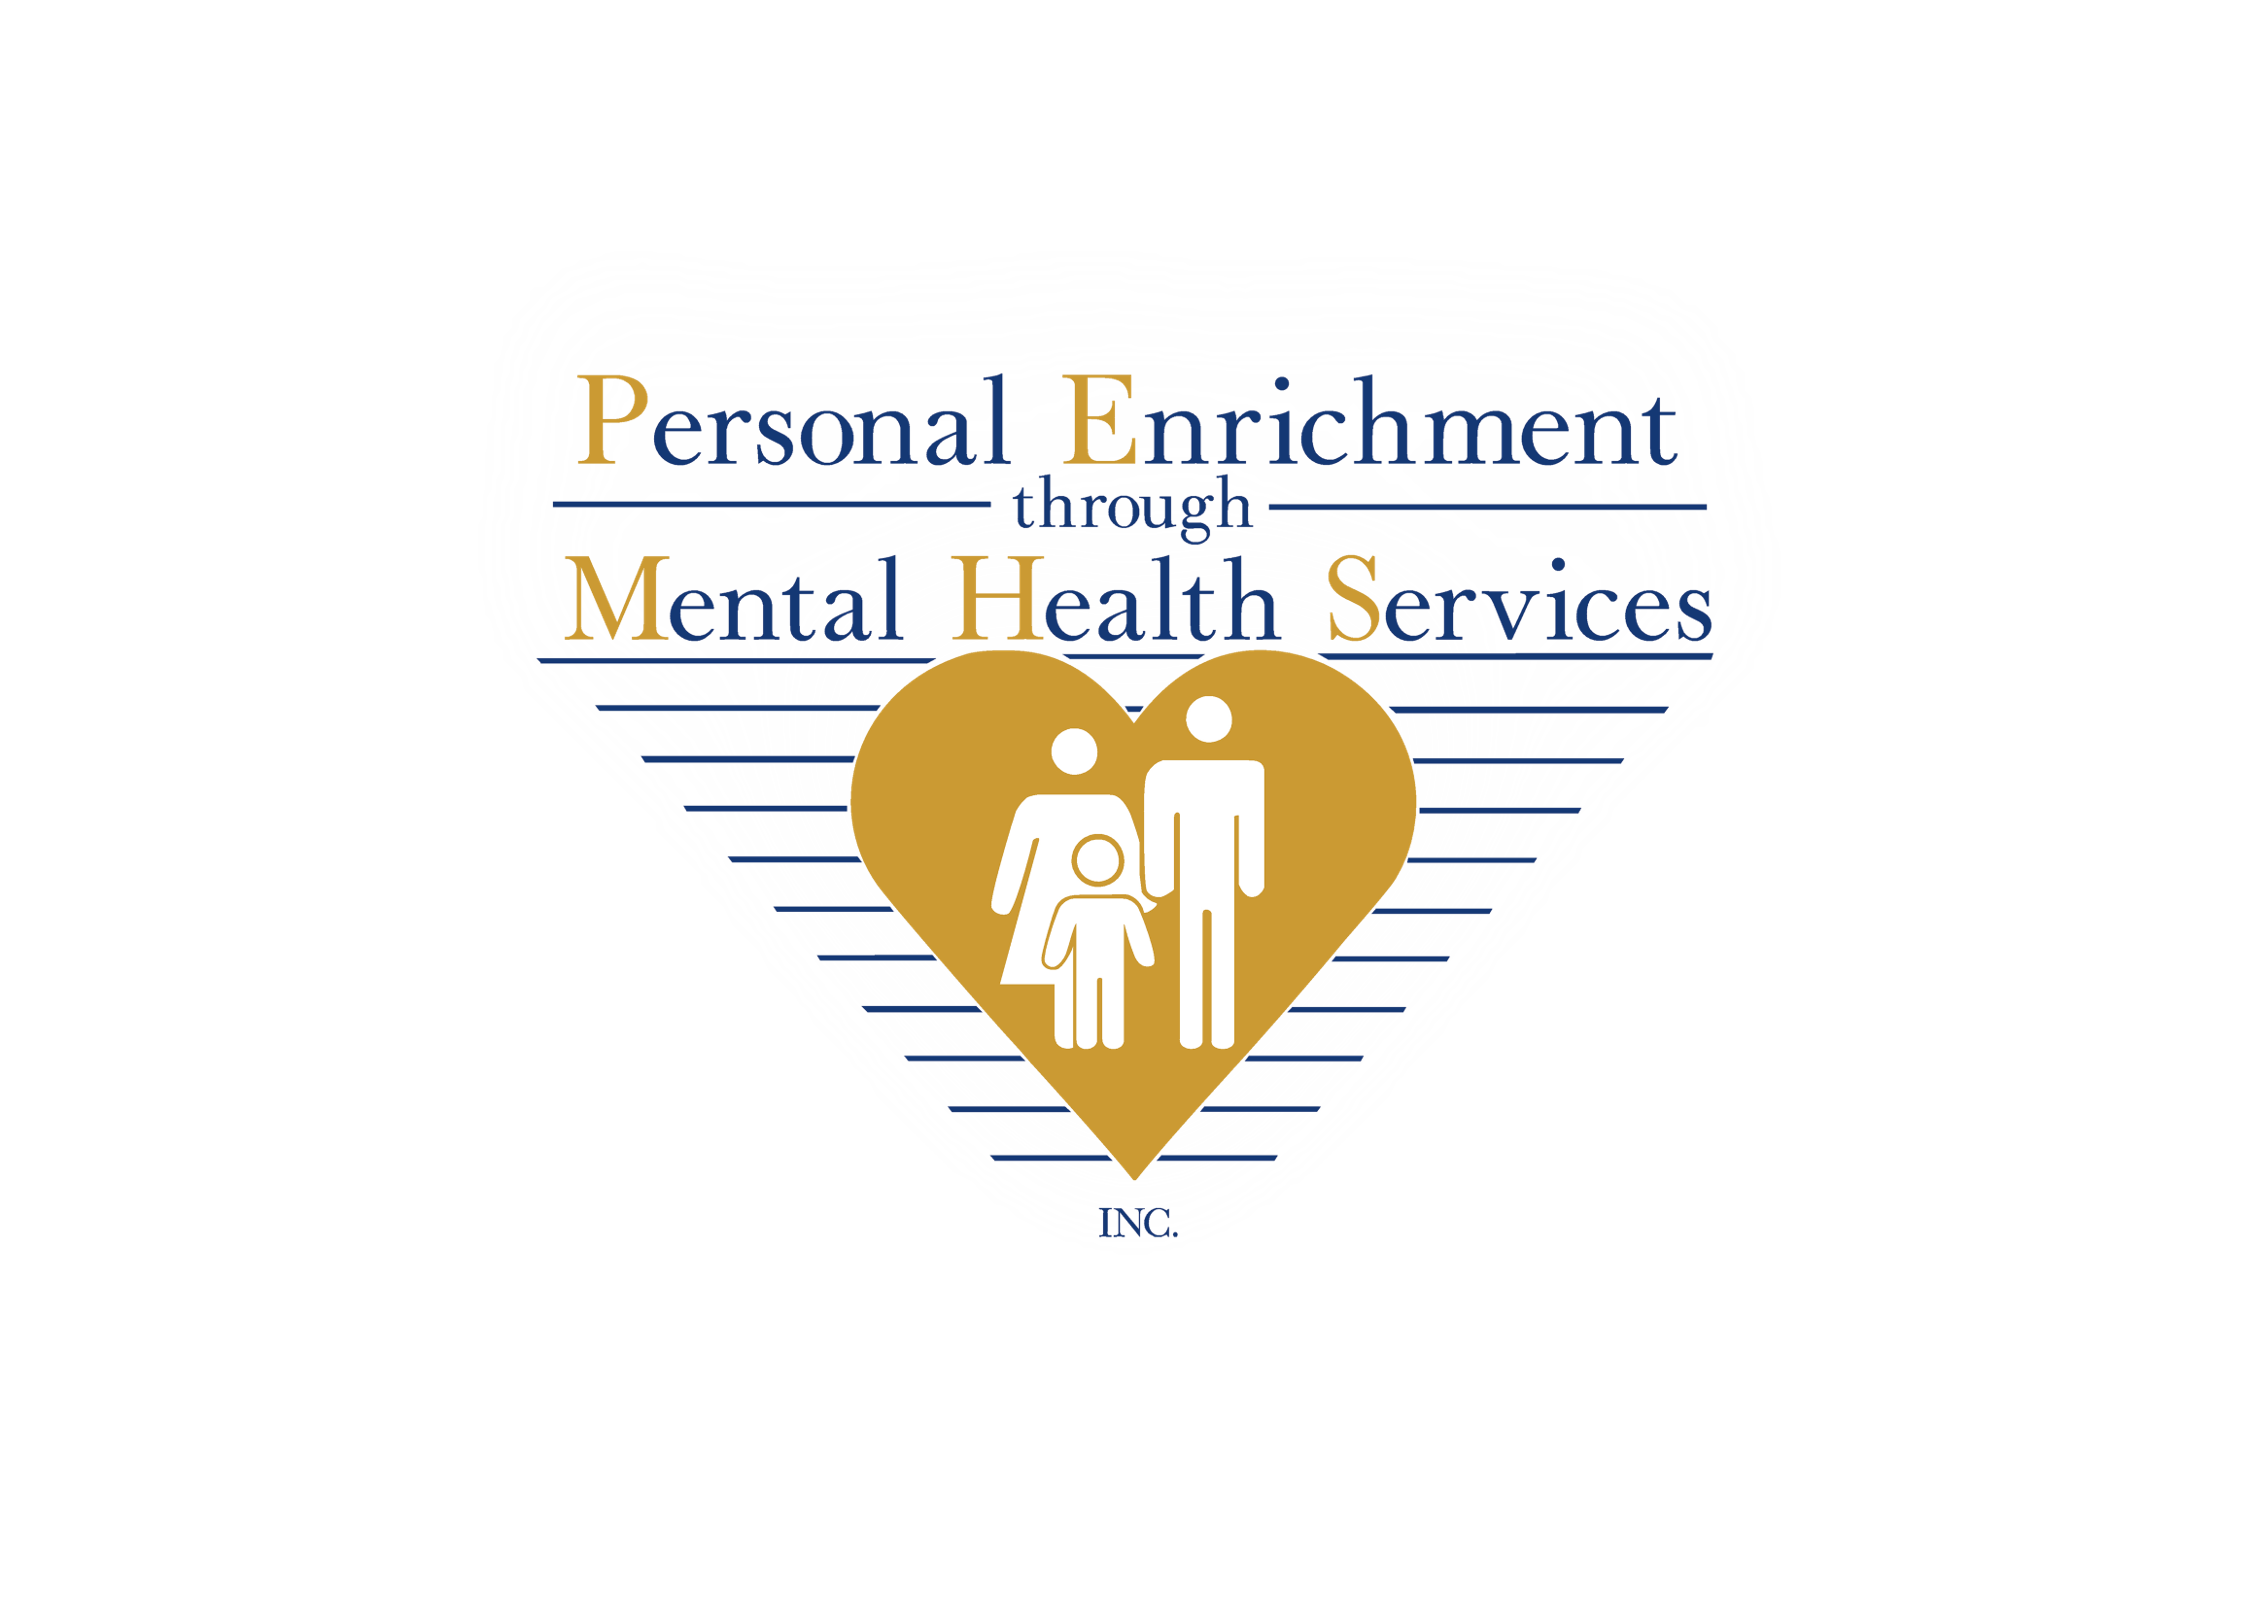 Personal Enrichment through Mental Health Services